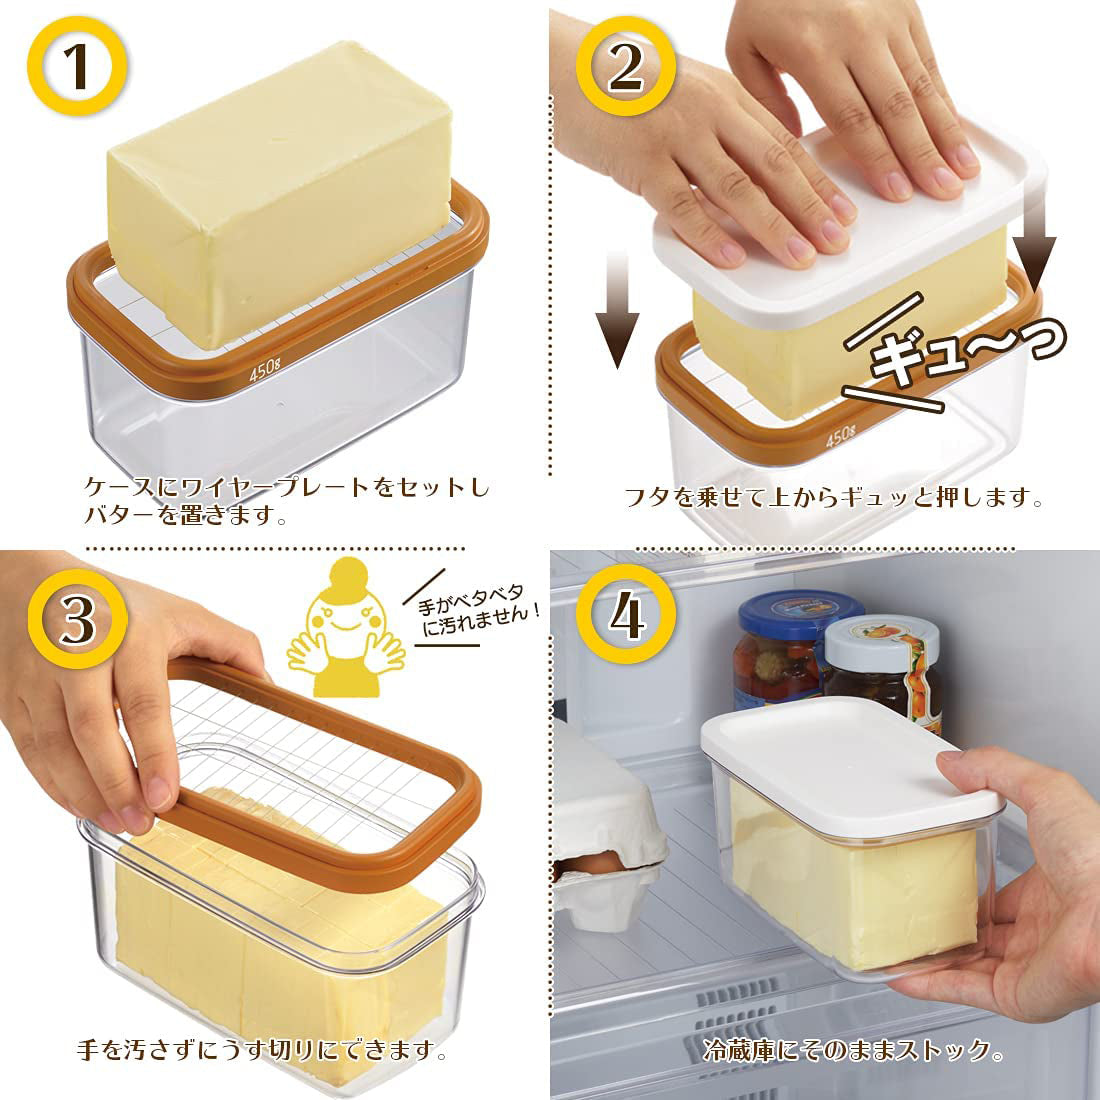 AKEBONO Butter Cutting Case